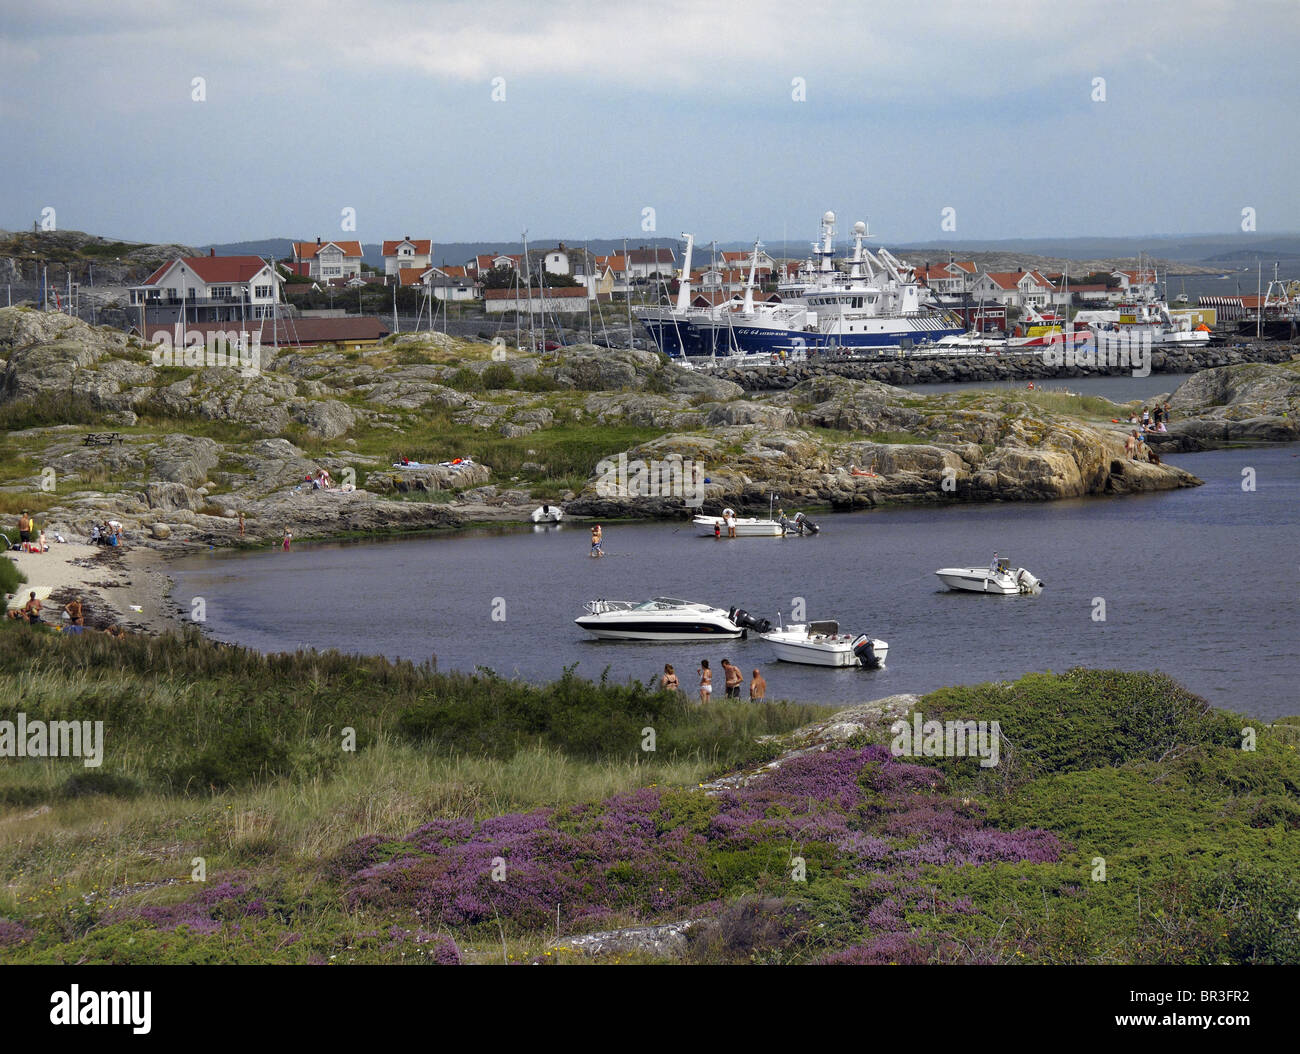 Rörö fishing village and tourist destination on Rörö island, Swedish vest  coast Stock Photo - Alamy